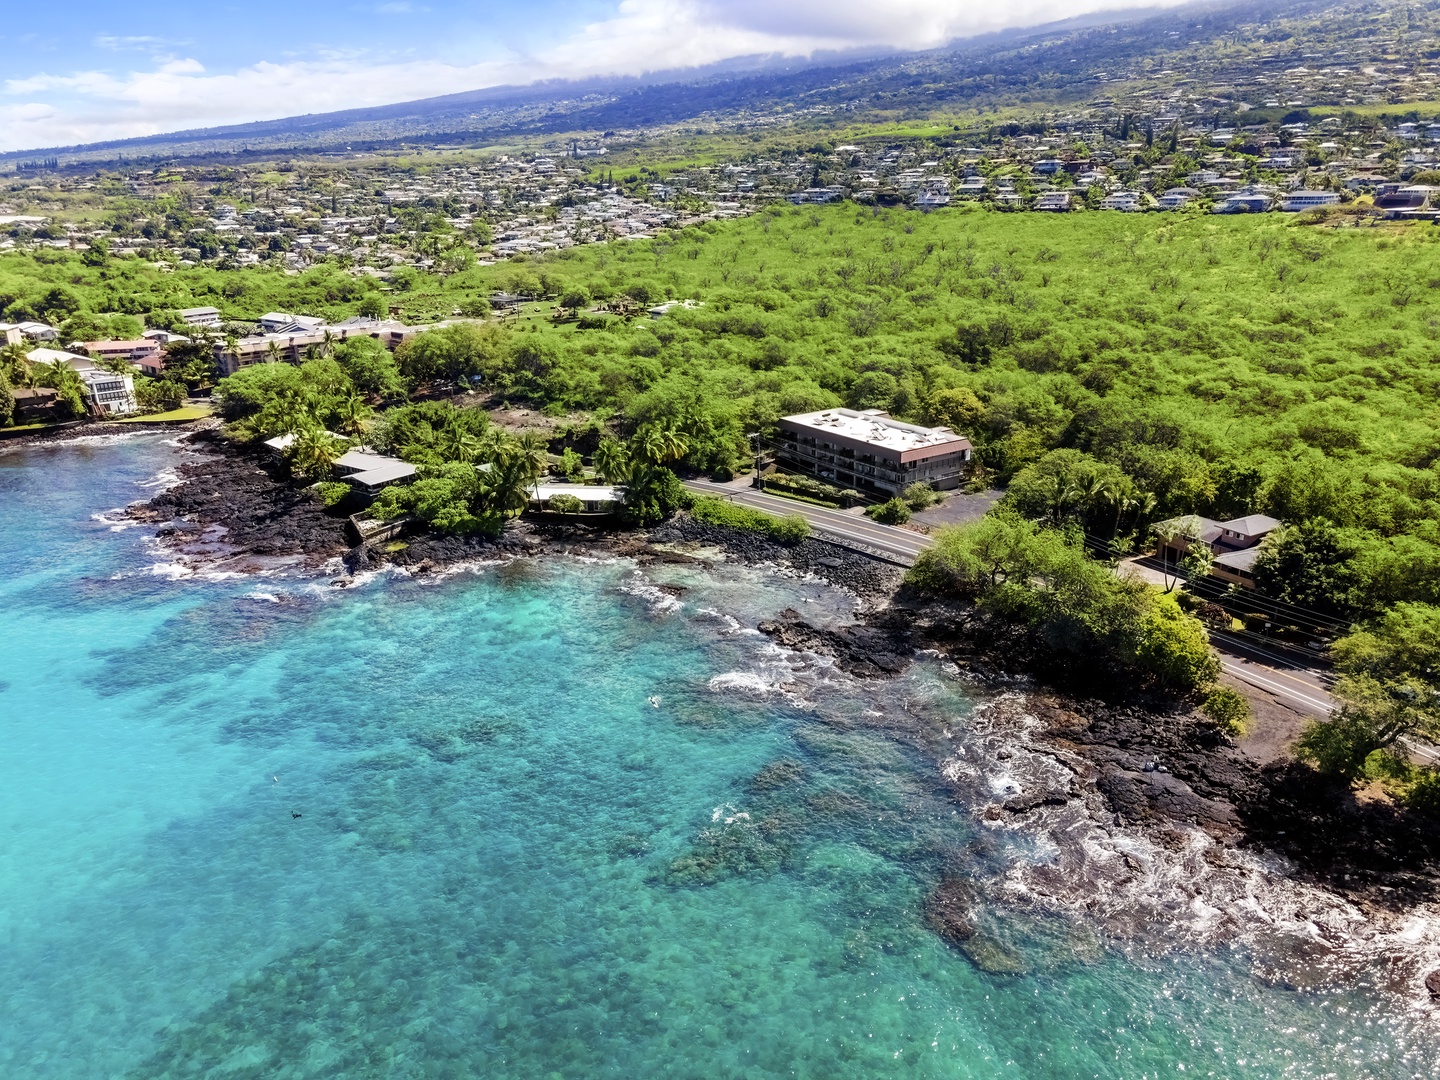 Kailua Kona Vacation Rentals, Lymans Bay Hale - Lymans bay is a famous surfers paradise